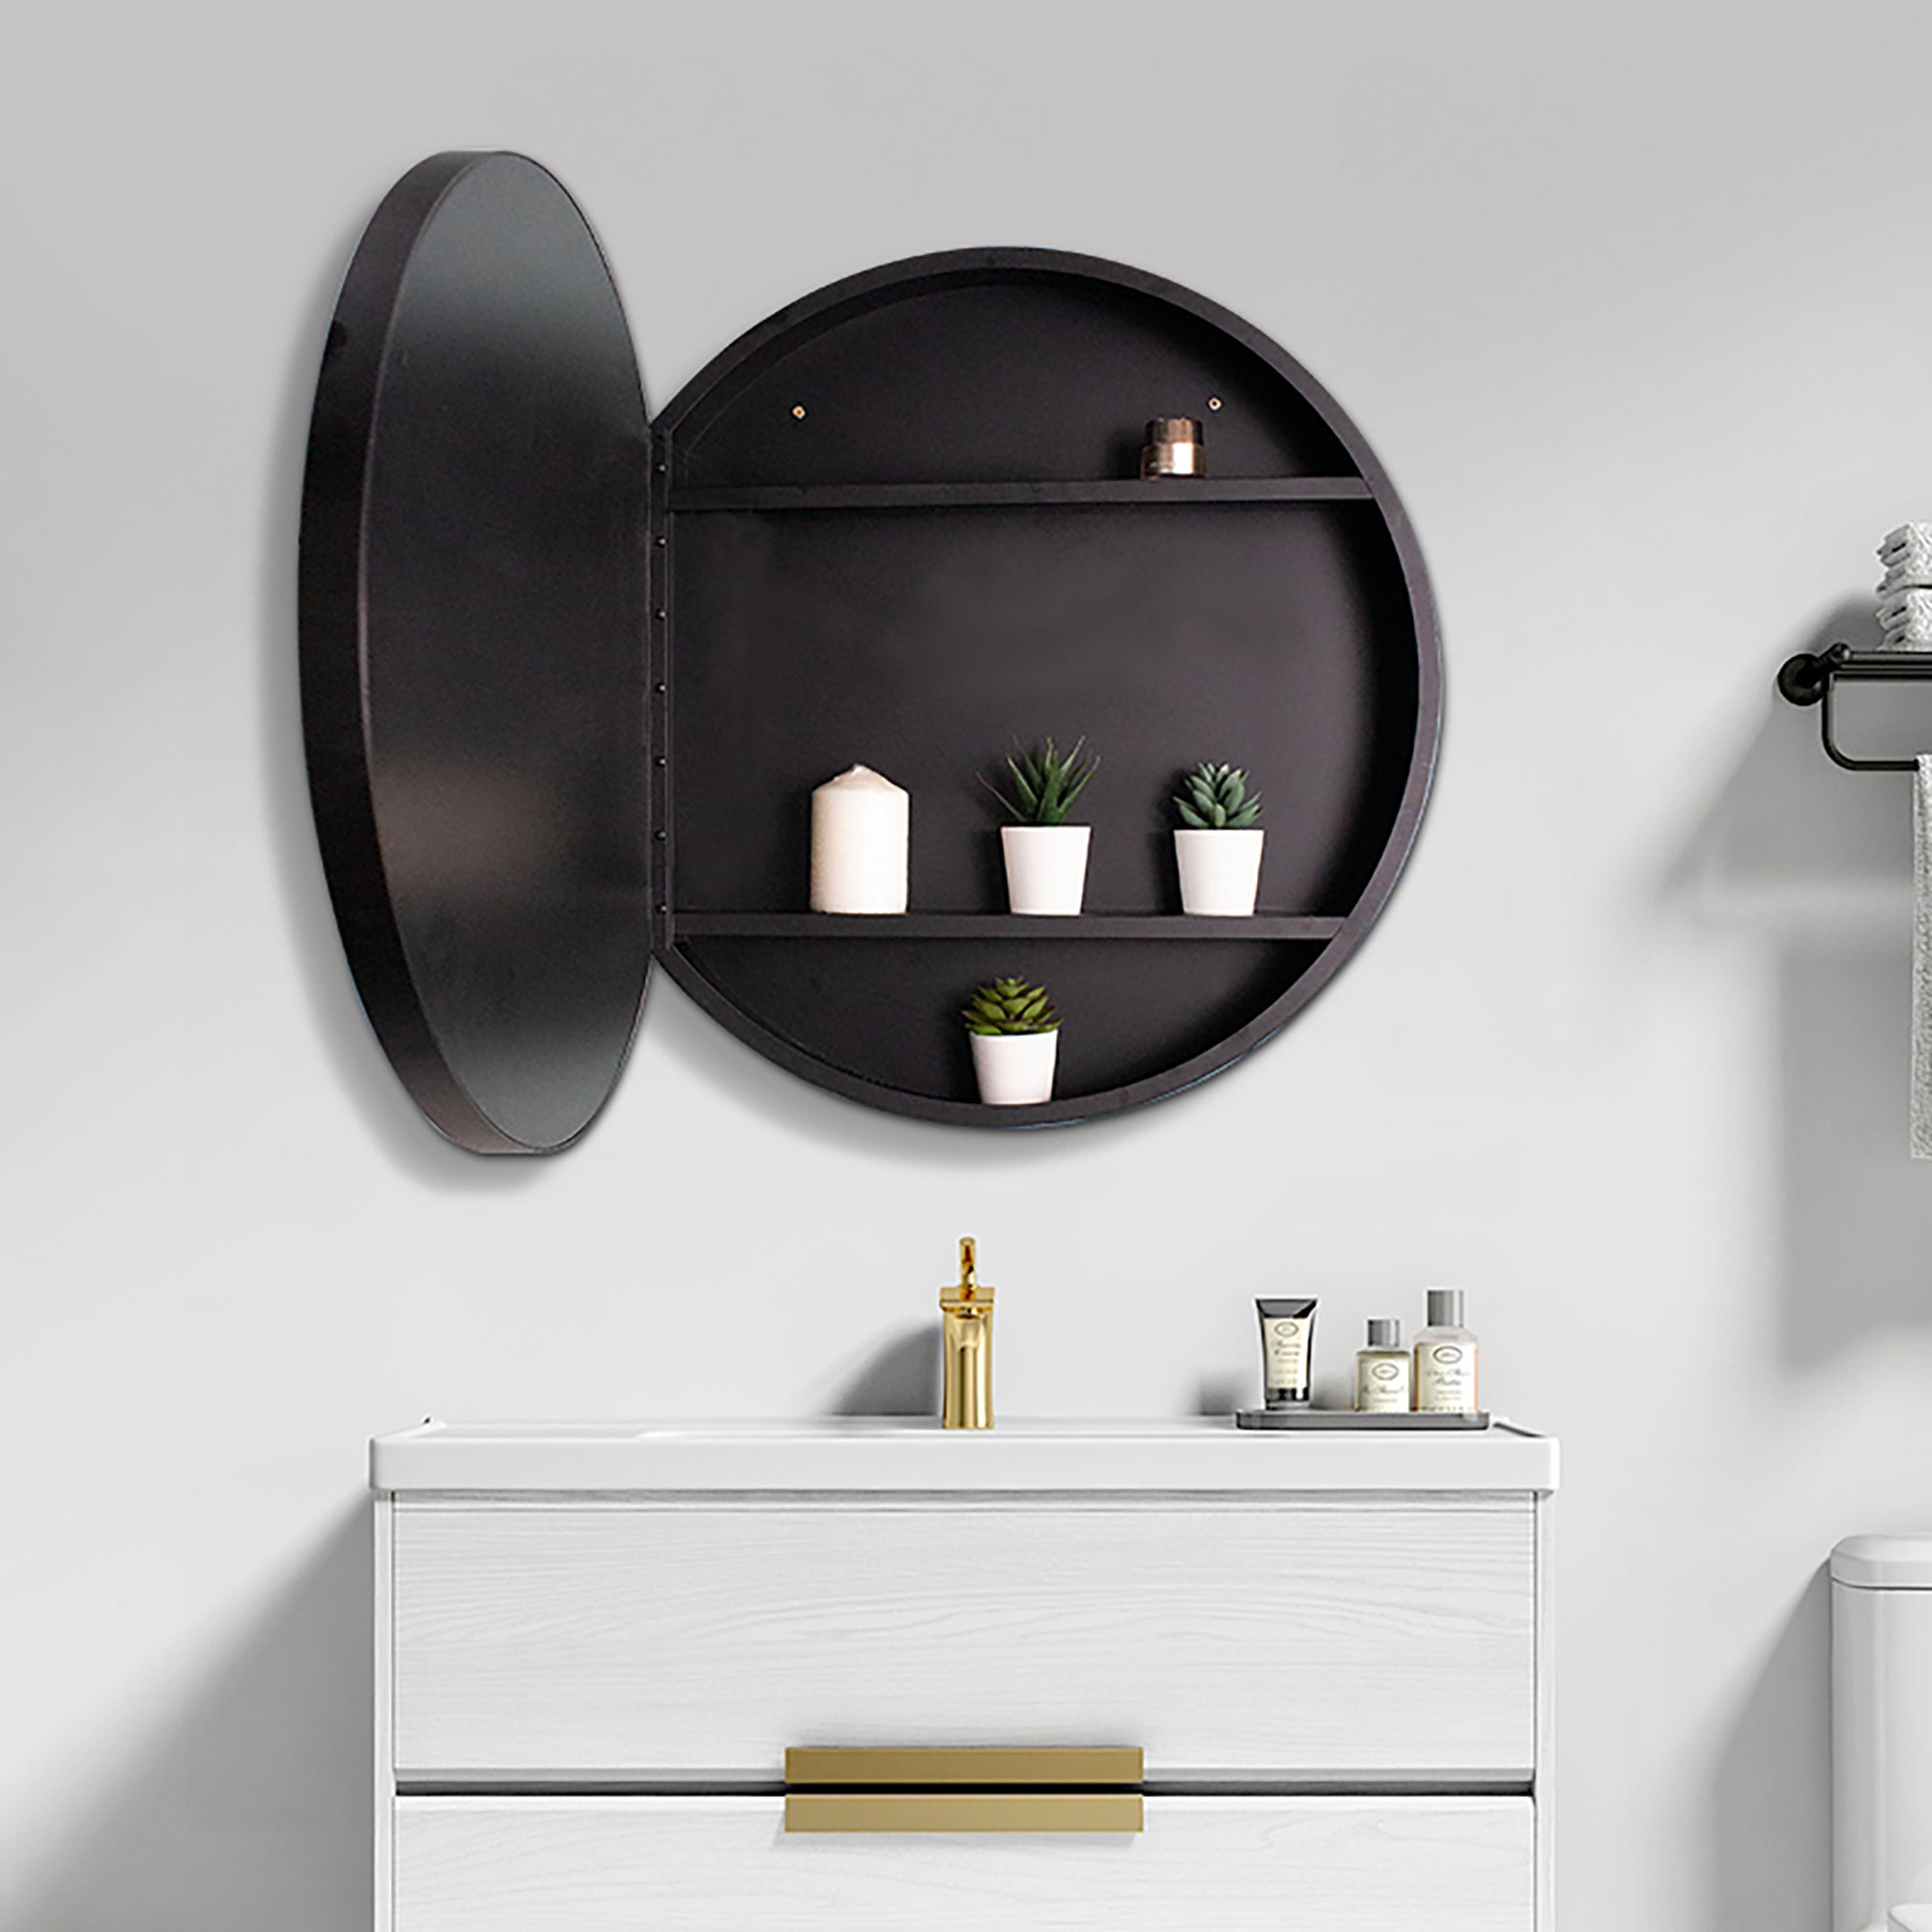 Staykiwi Medicine Cabinet Round 24 x 24 Inch, Wall Mount Bathroom Cabinet with Mirror, Circular Black Metal Framed Bath Storage Cabinet Surface Mounted